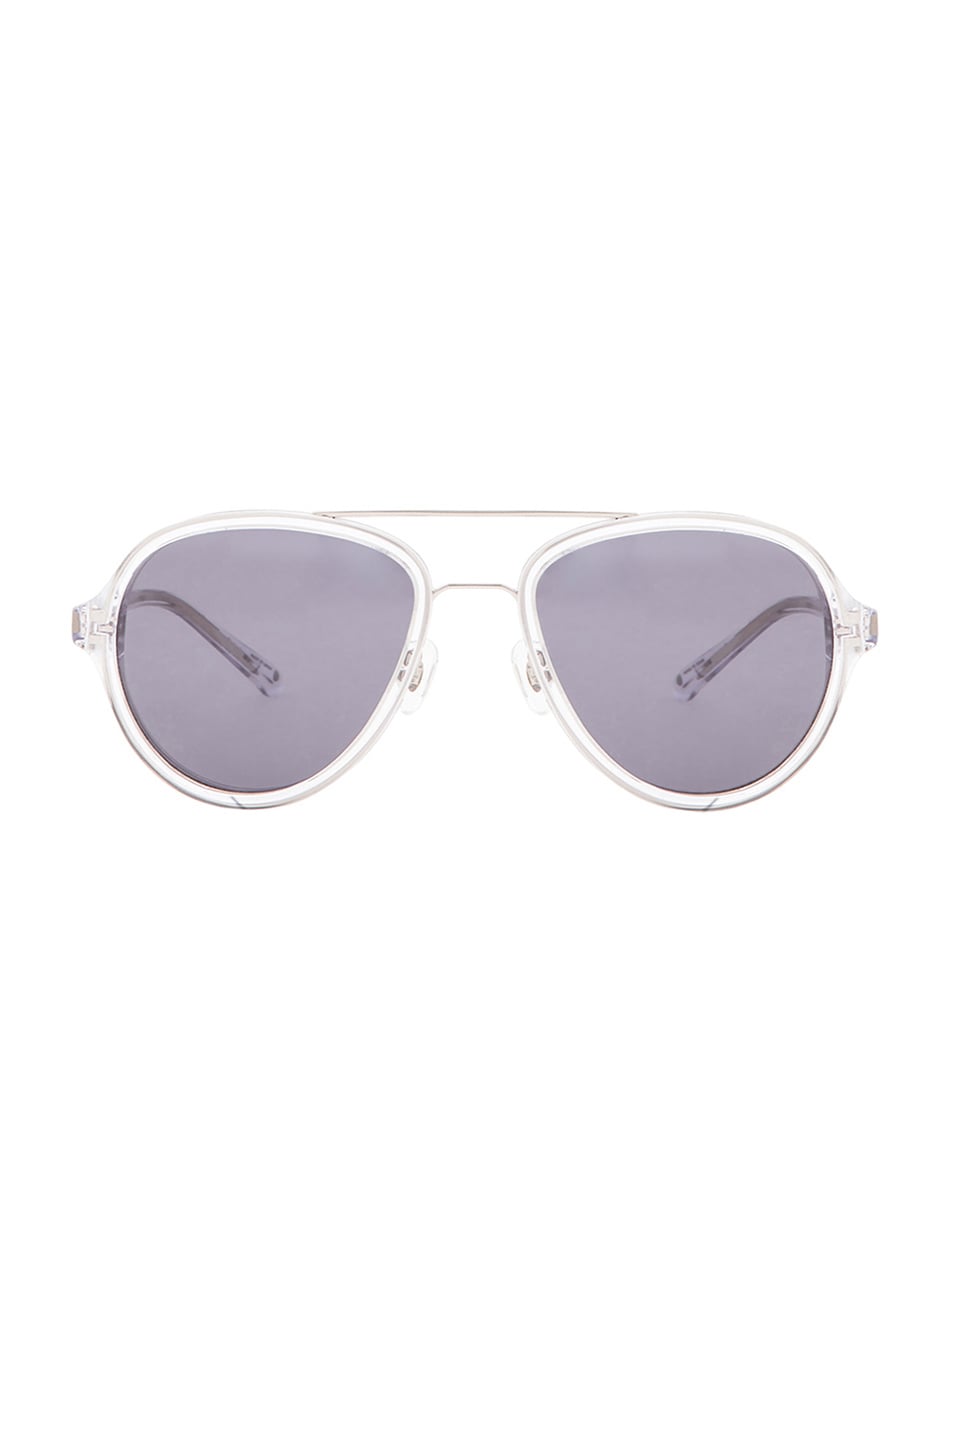 3.1 phillip lim Aviator Sunglasses in Clear Silver | FWRD